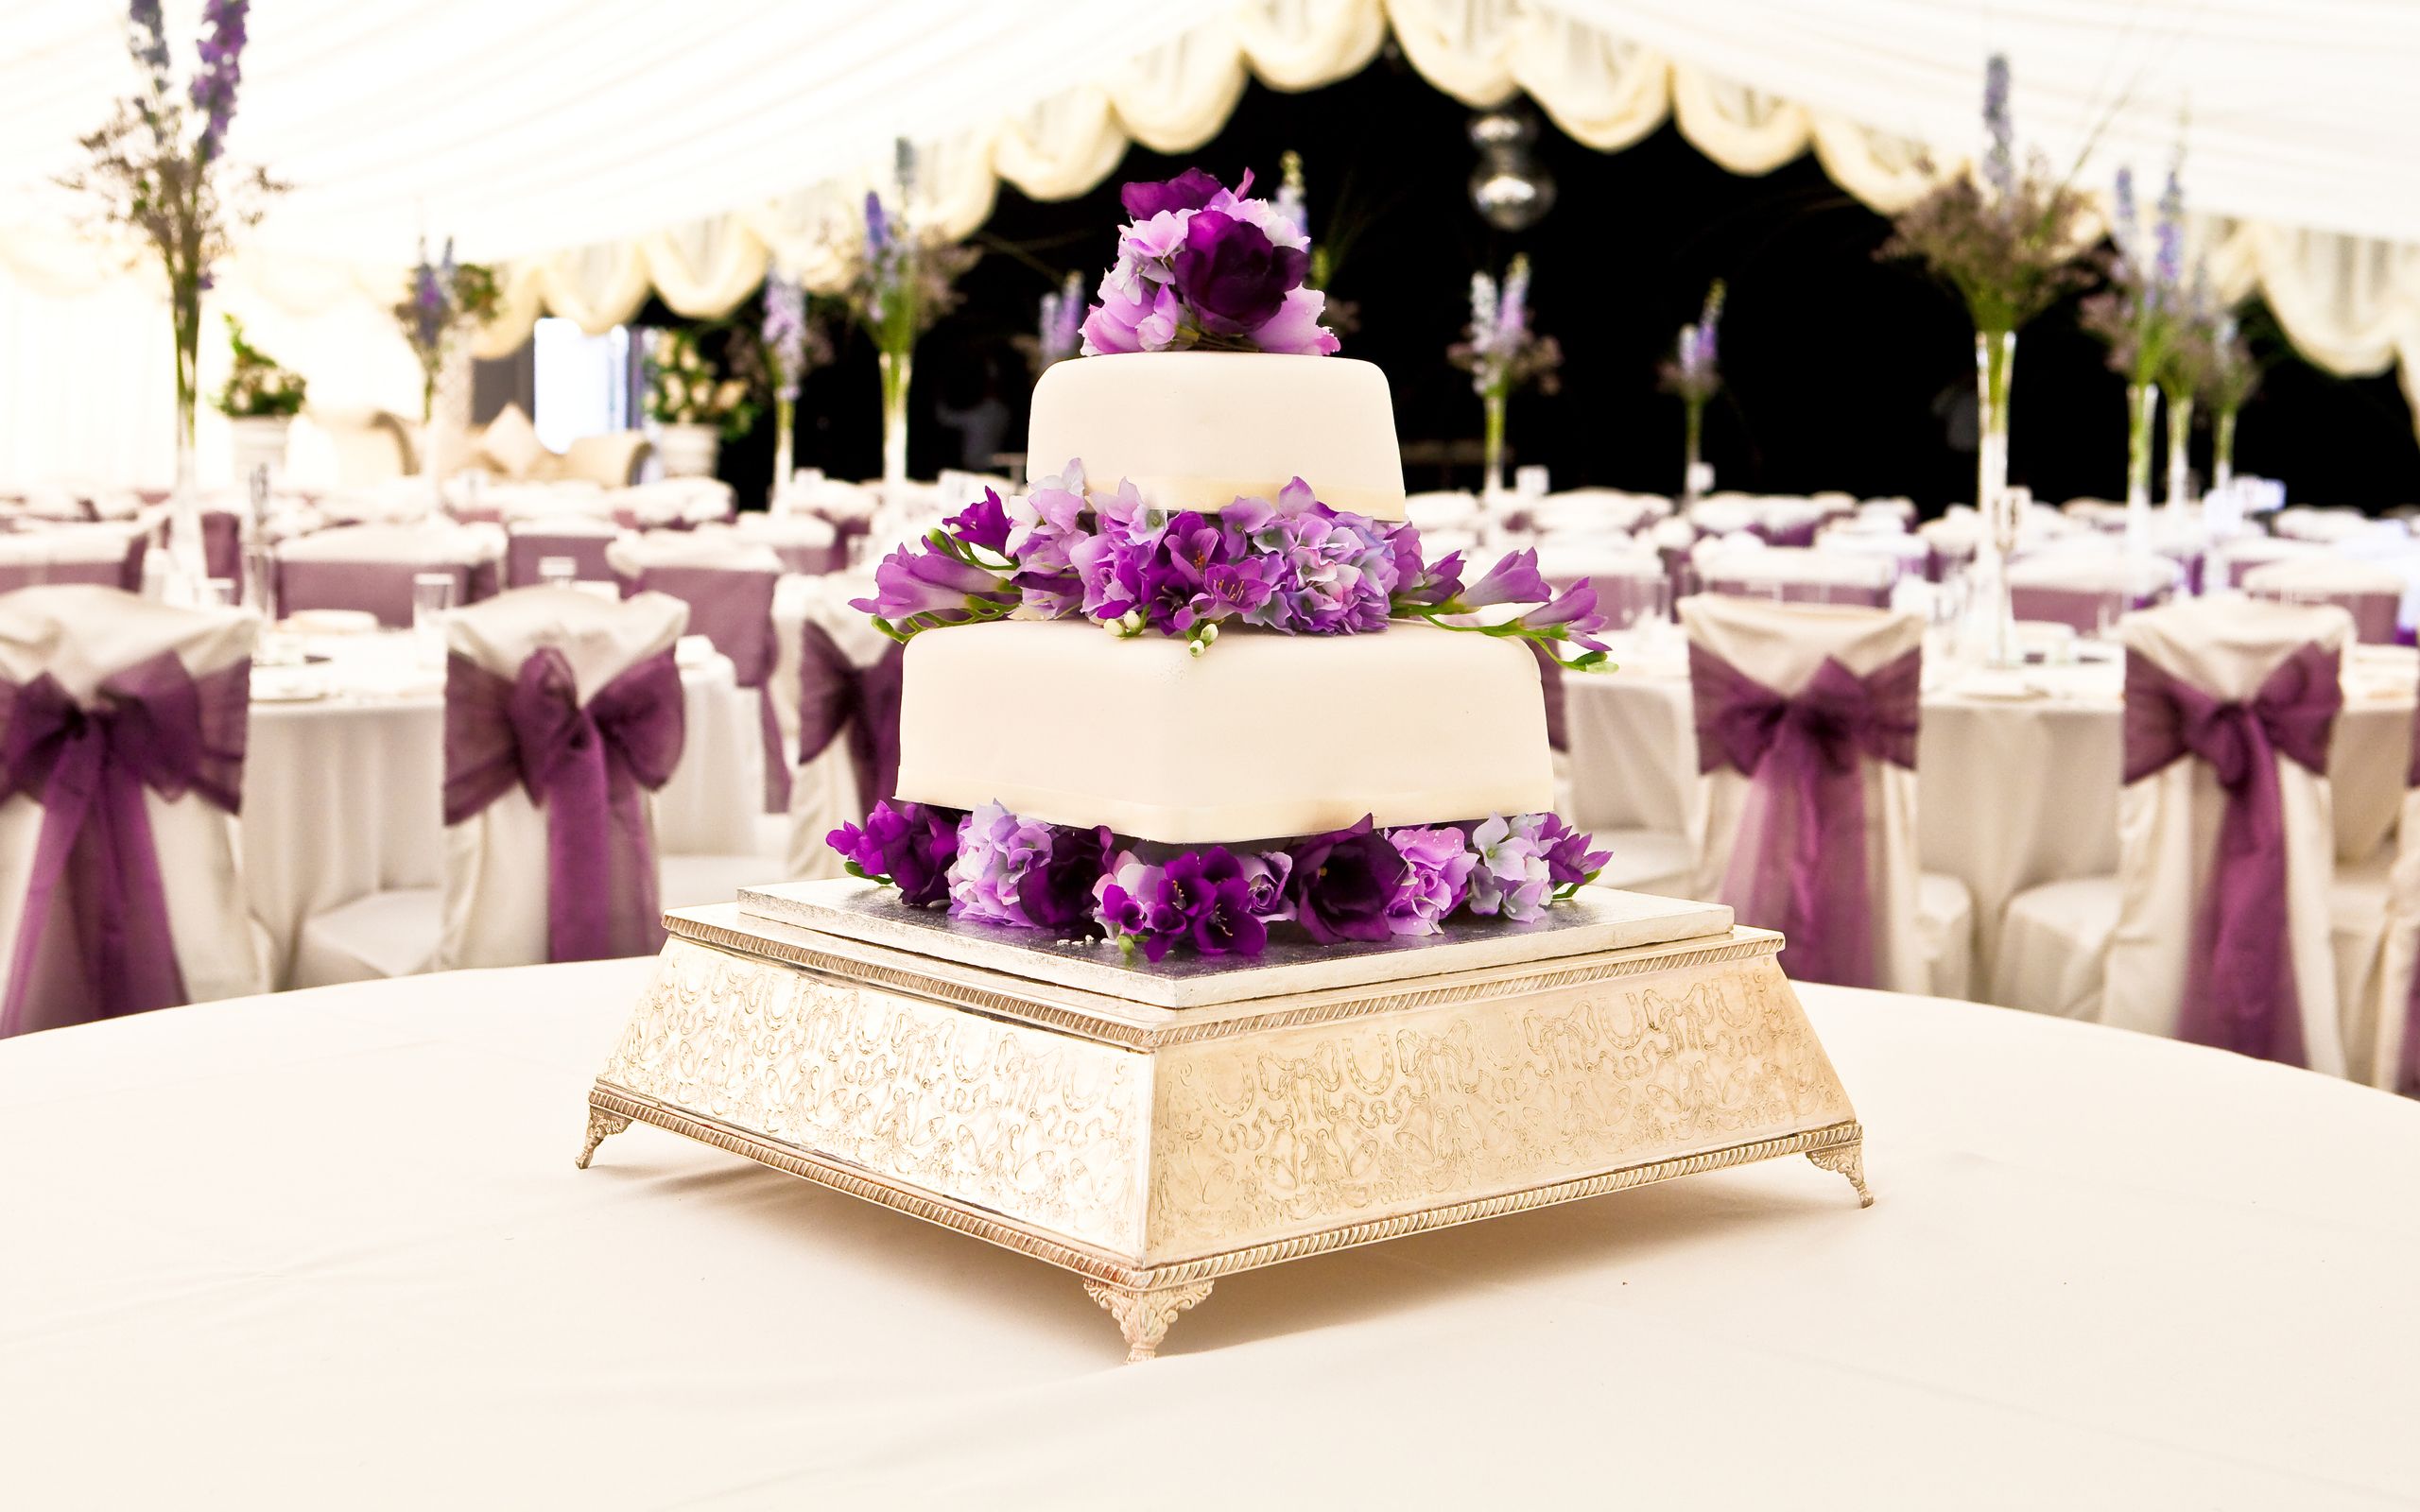 Download wallpaper Wedding cake .besthqwallpaper.com